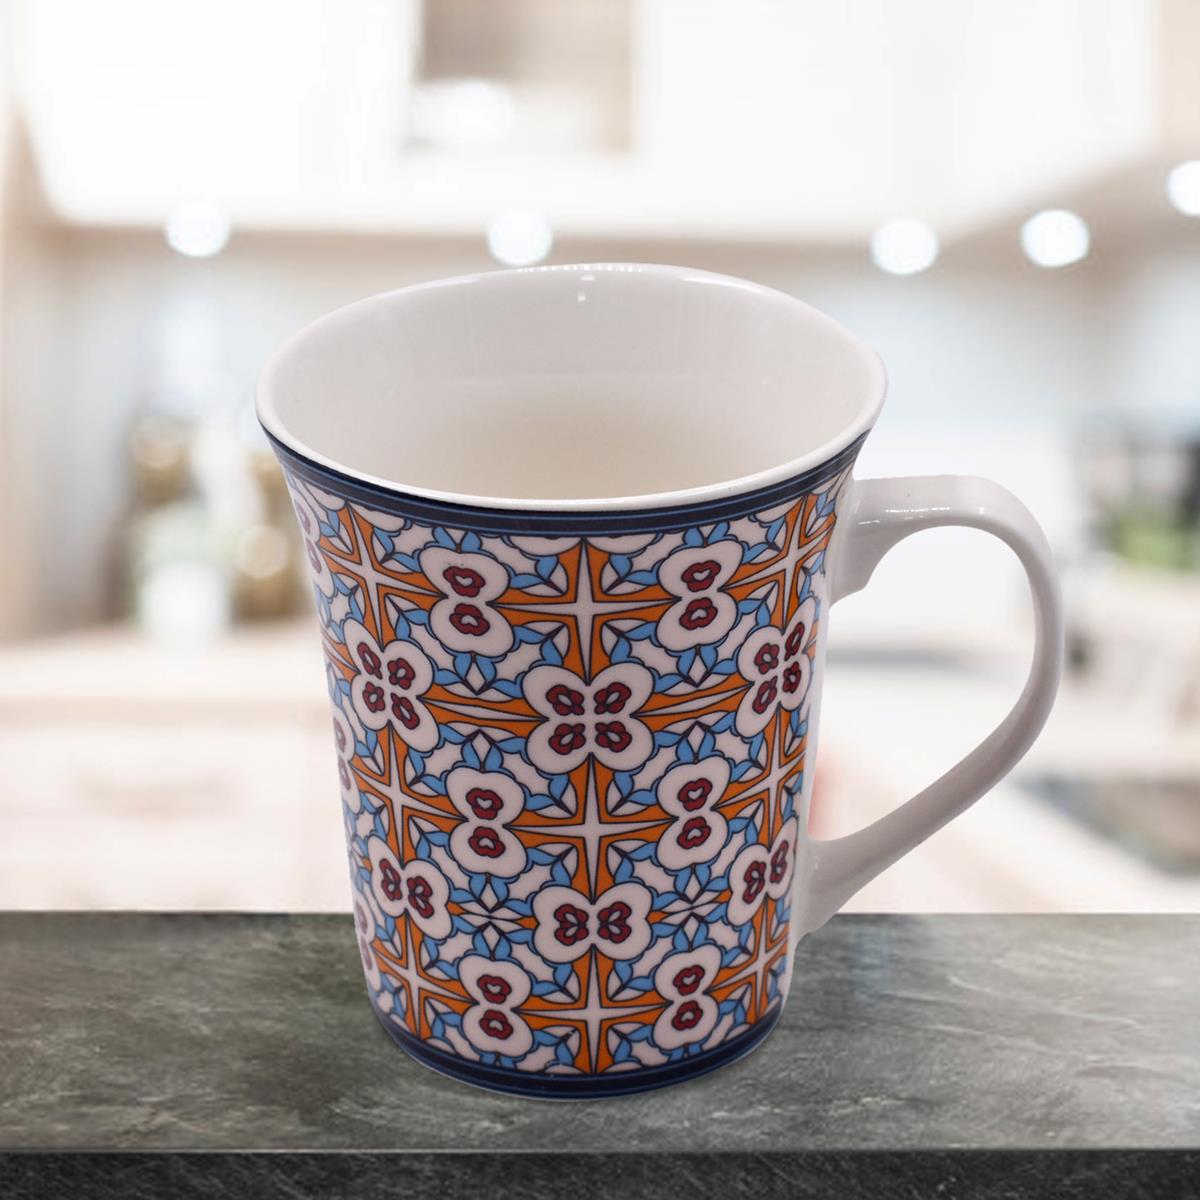 Printed Ceramic Tall Coffee or Tea Mug with handle - 325ml (BPM4430-C)